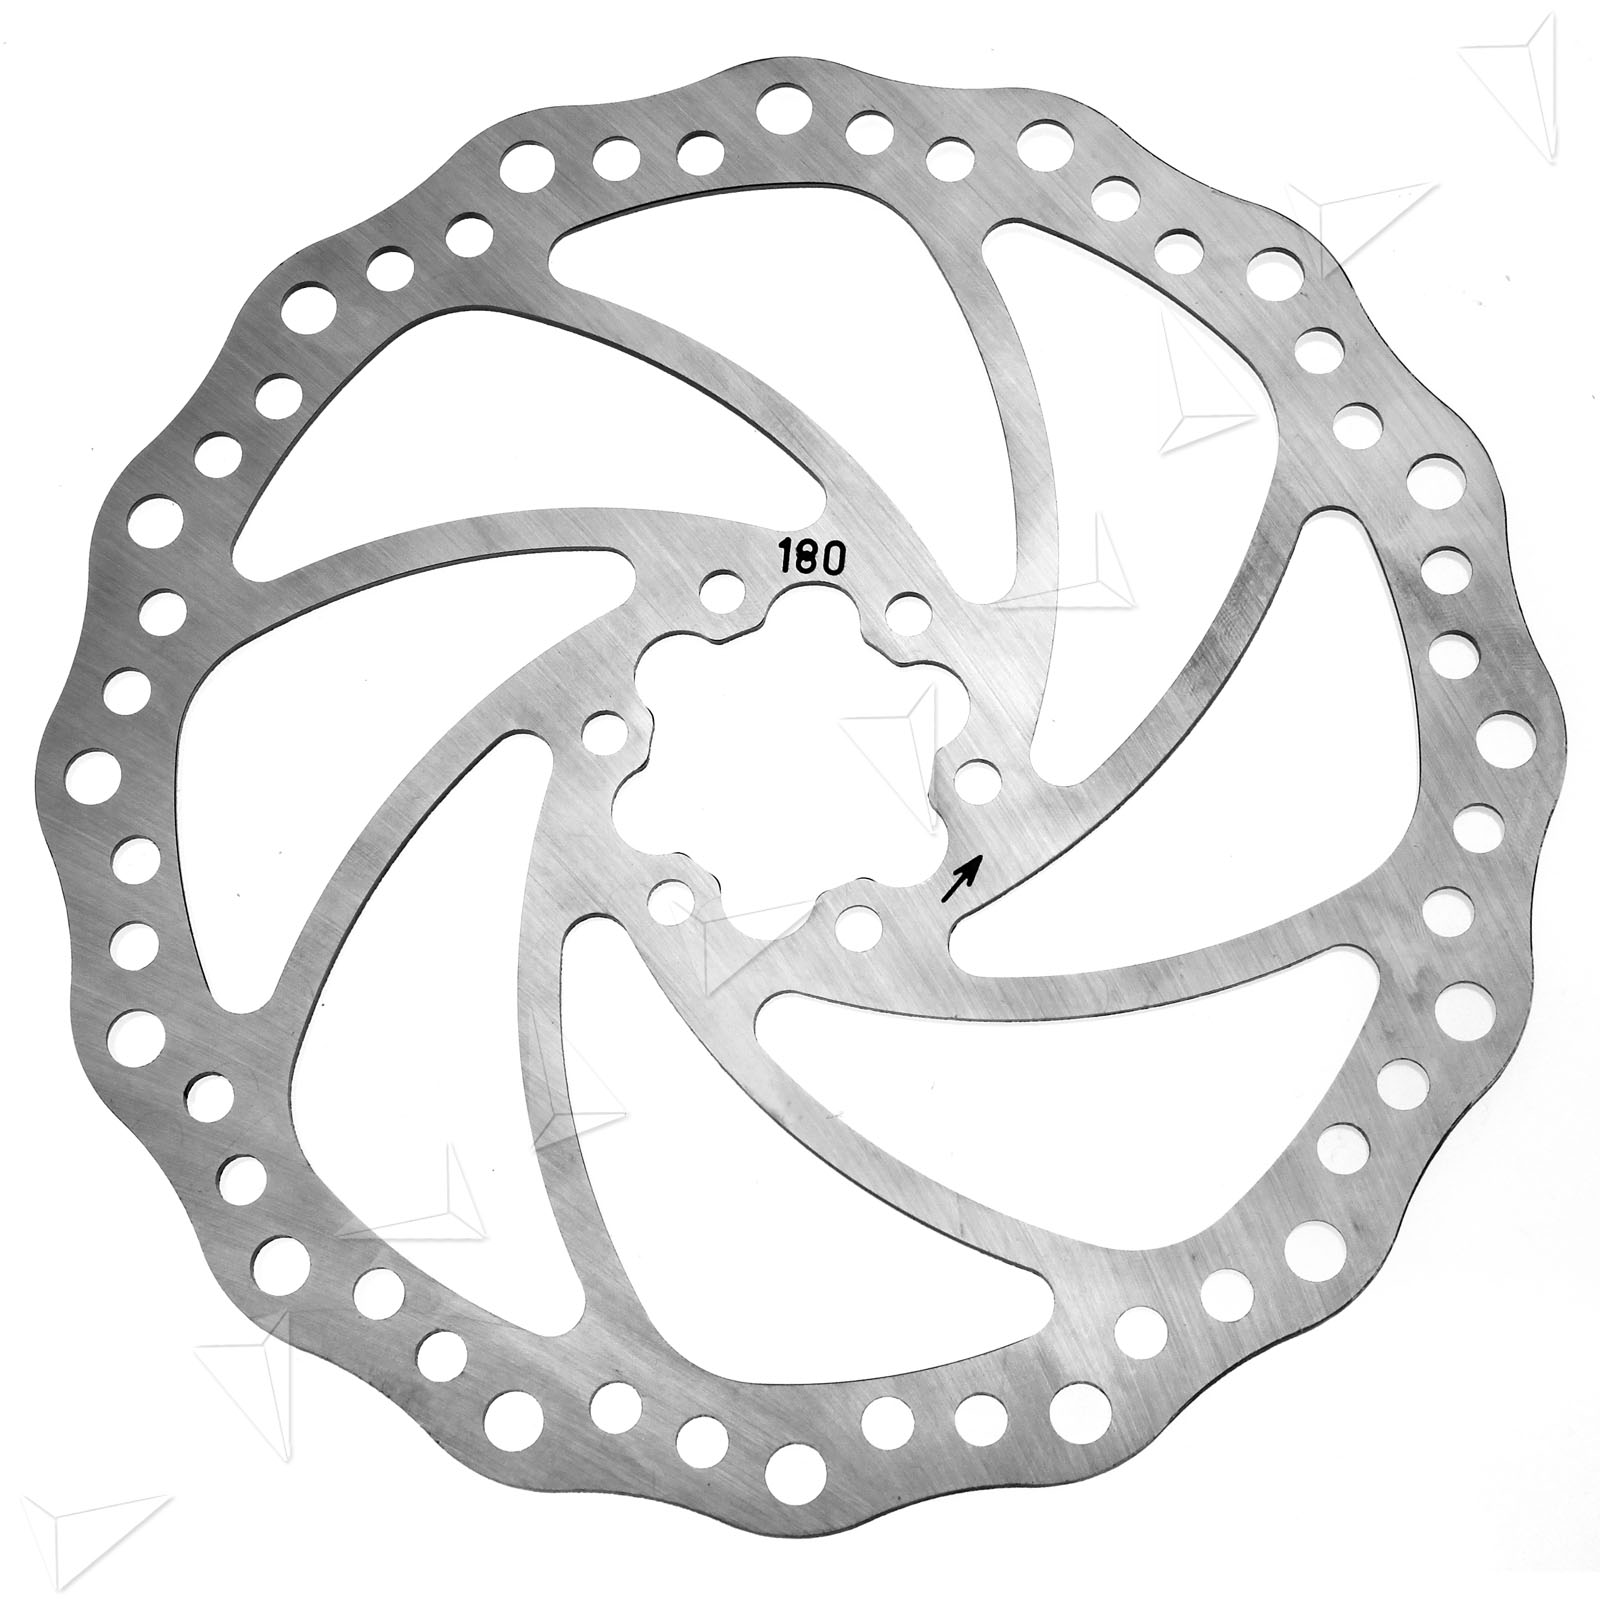 New Bike Bicycle Disc Brake Rotors Cycling Clean Sweep Rotors 180mm